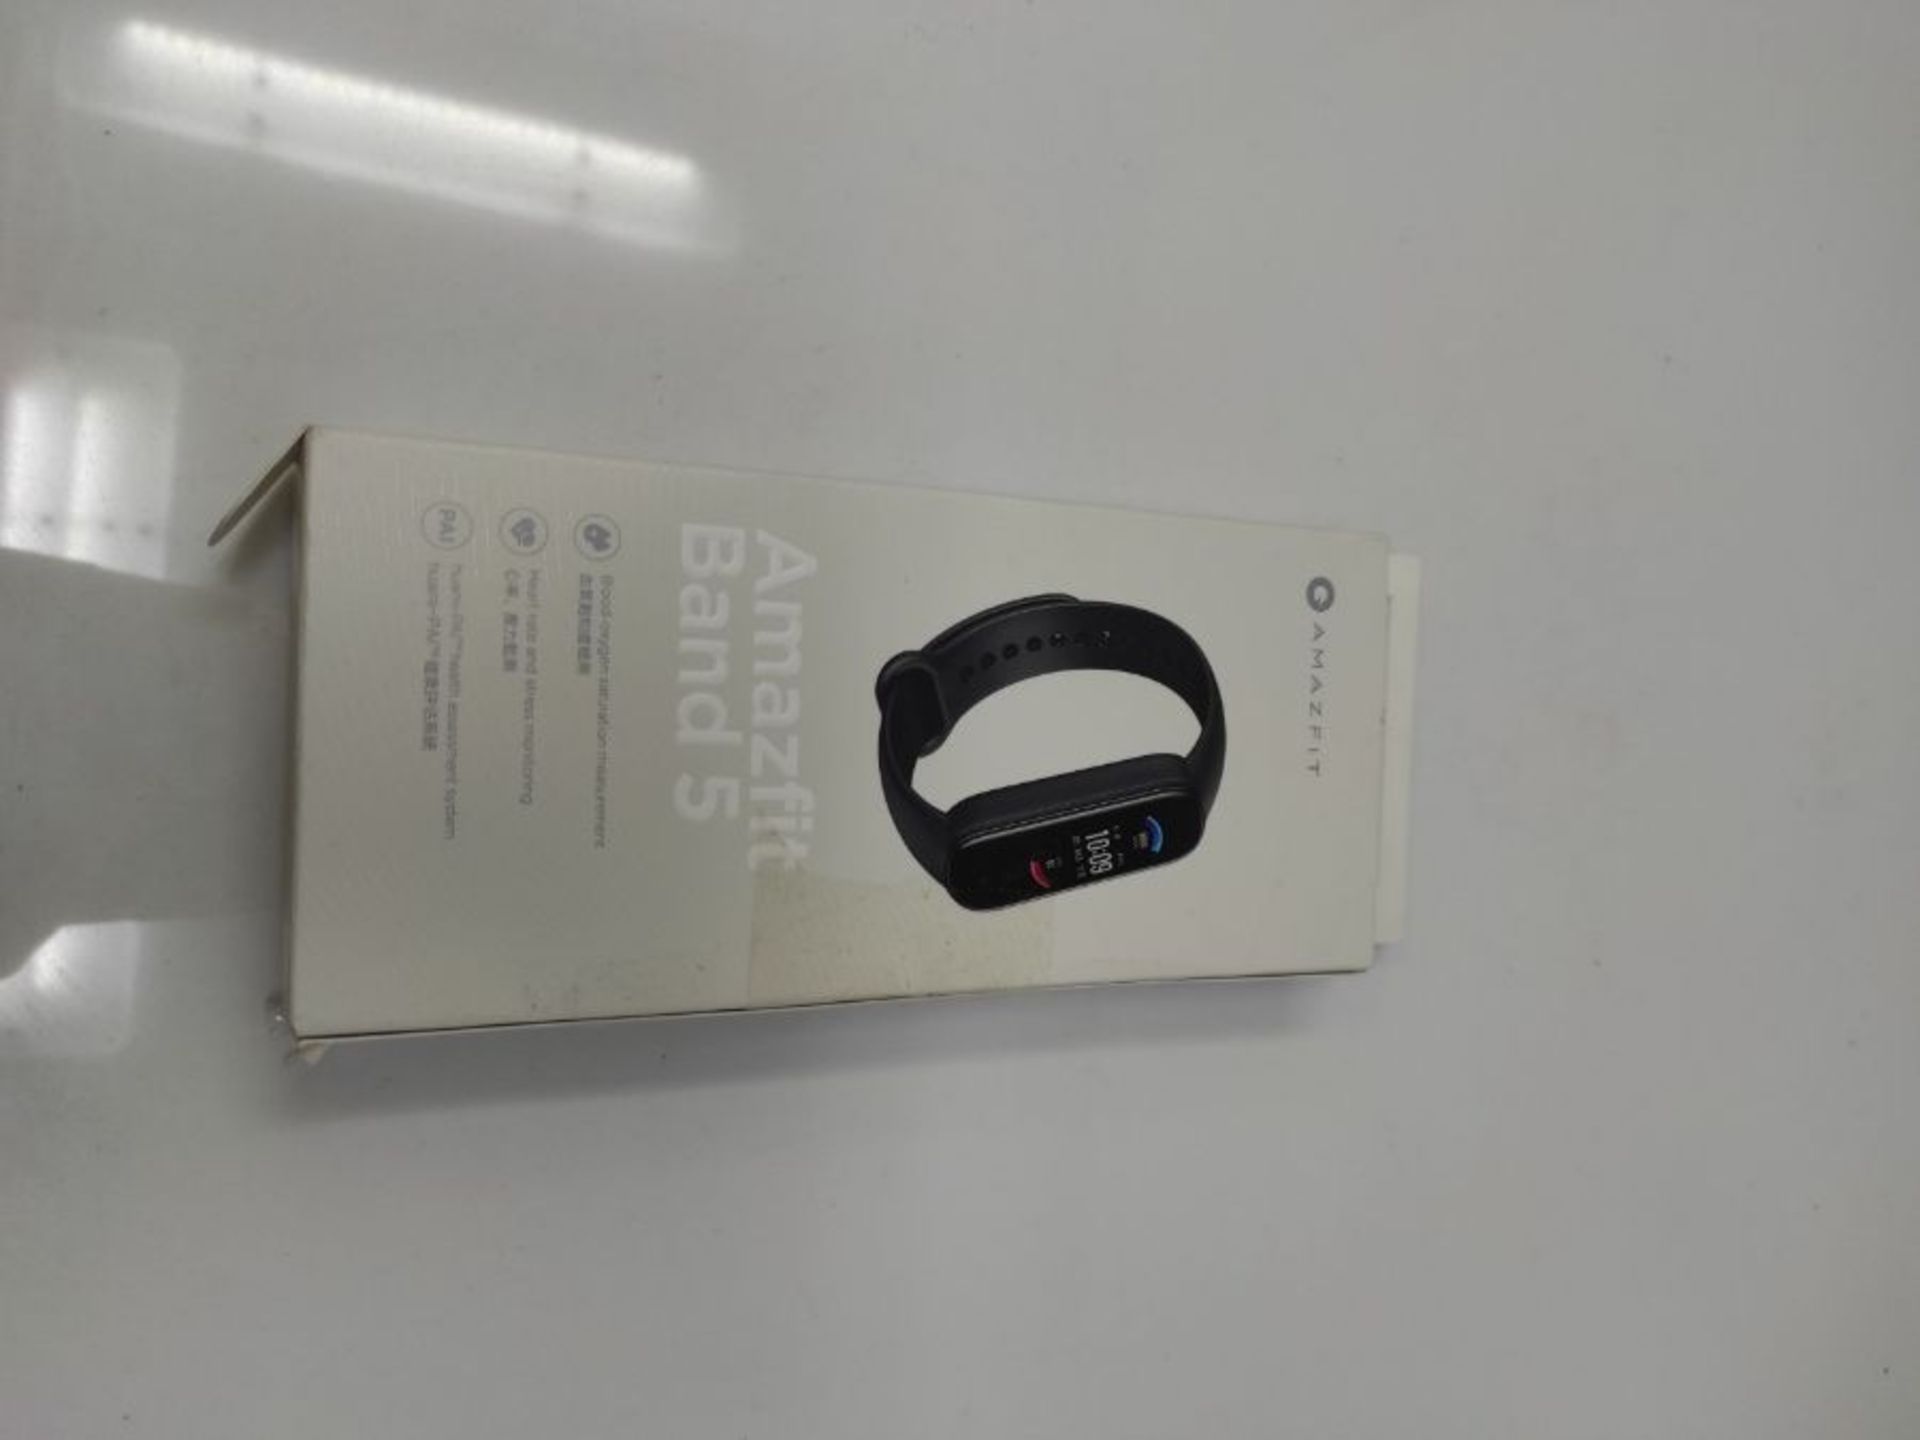 Amazfit Smartwatch Band 5 Fitness Tracker Armband mit integrierter Alexa, 15 Tagen Akk - Image 2 of 3